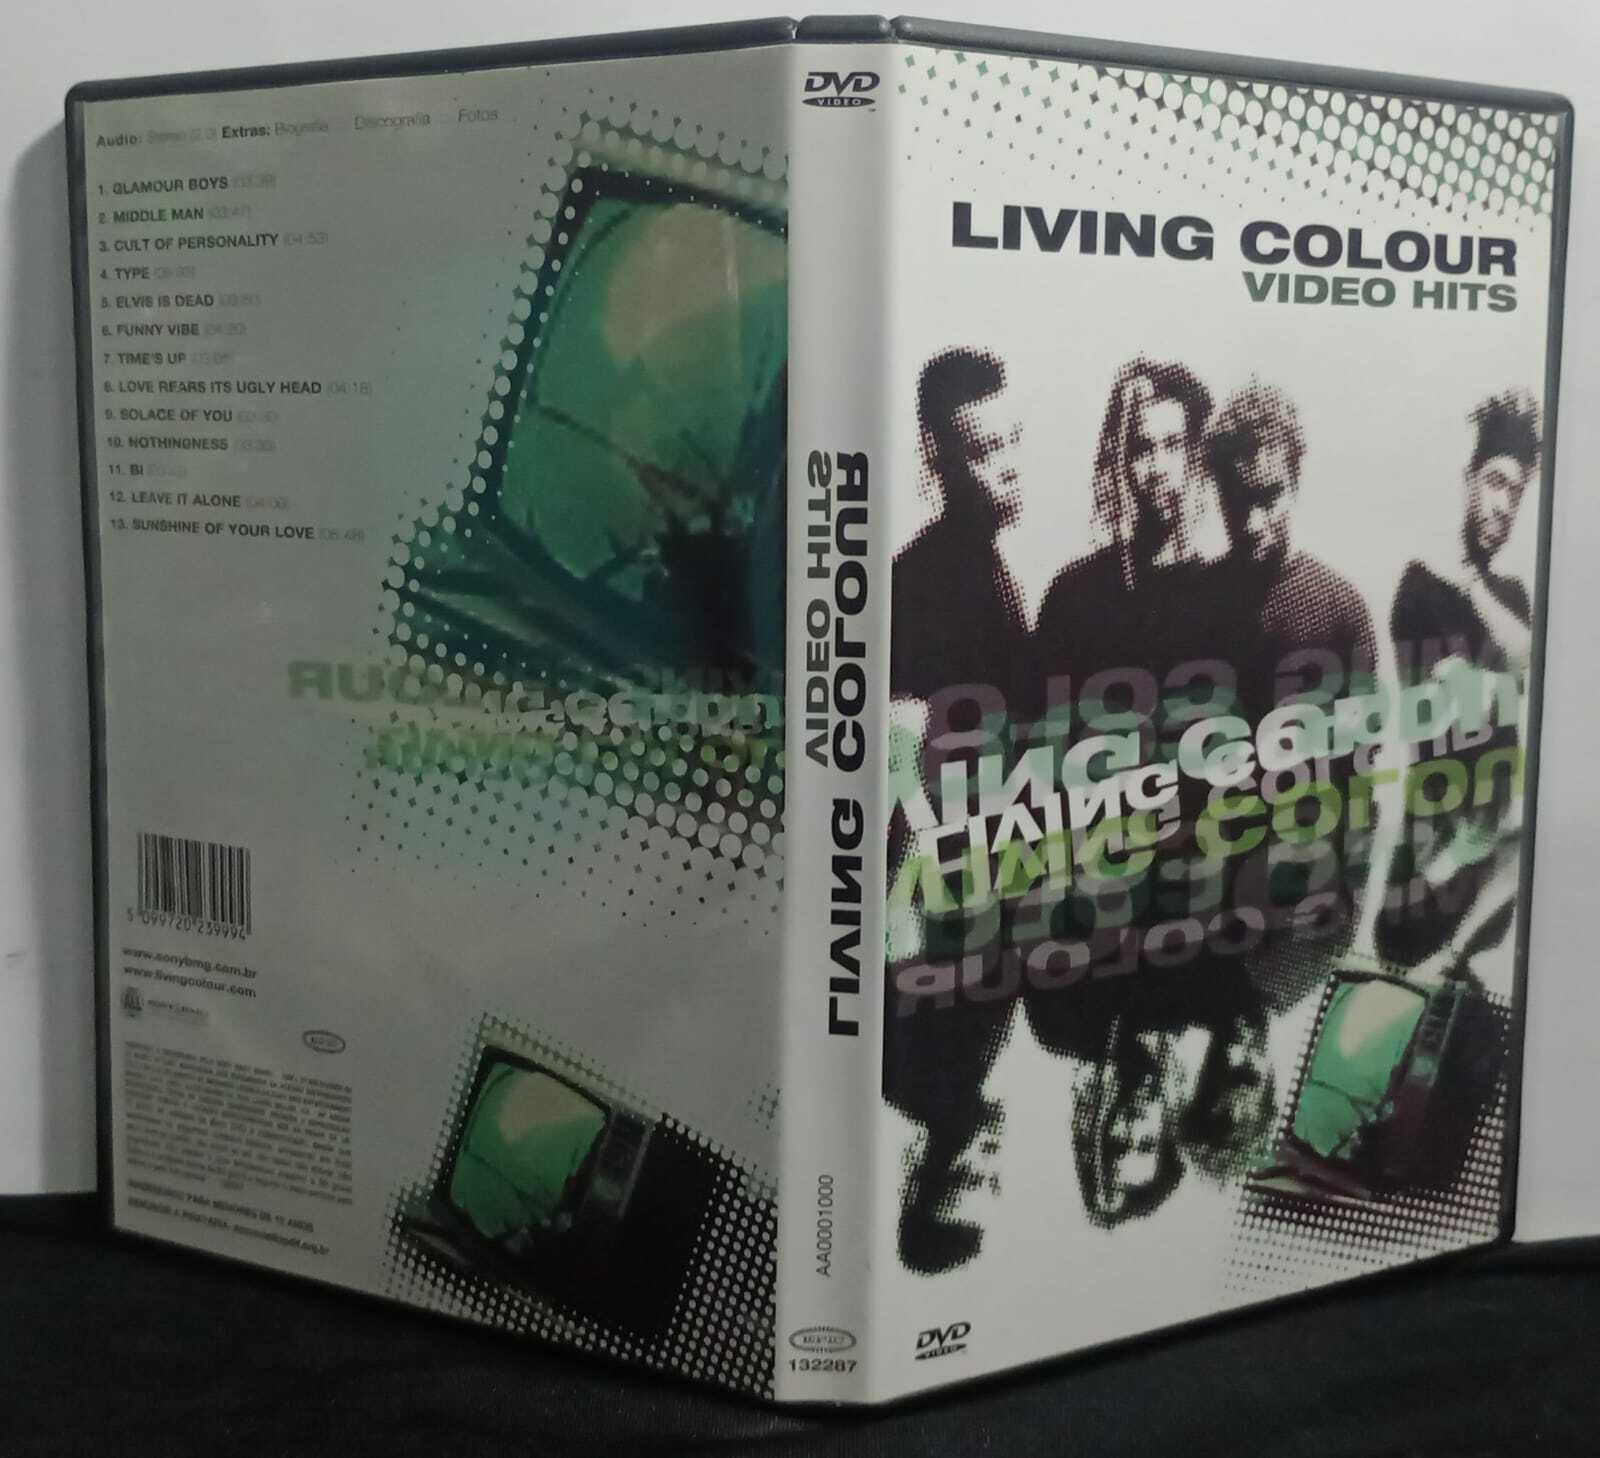 DVD - Living Colour - Video Hits